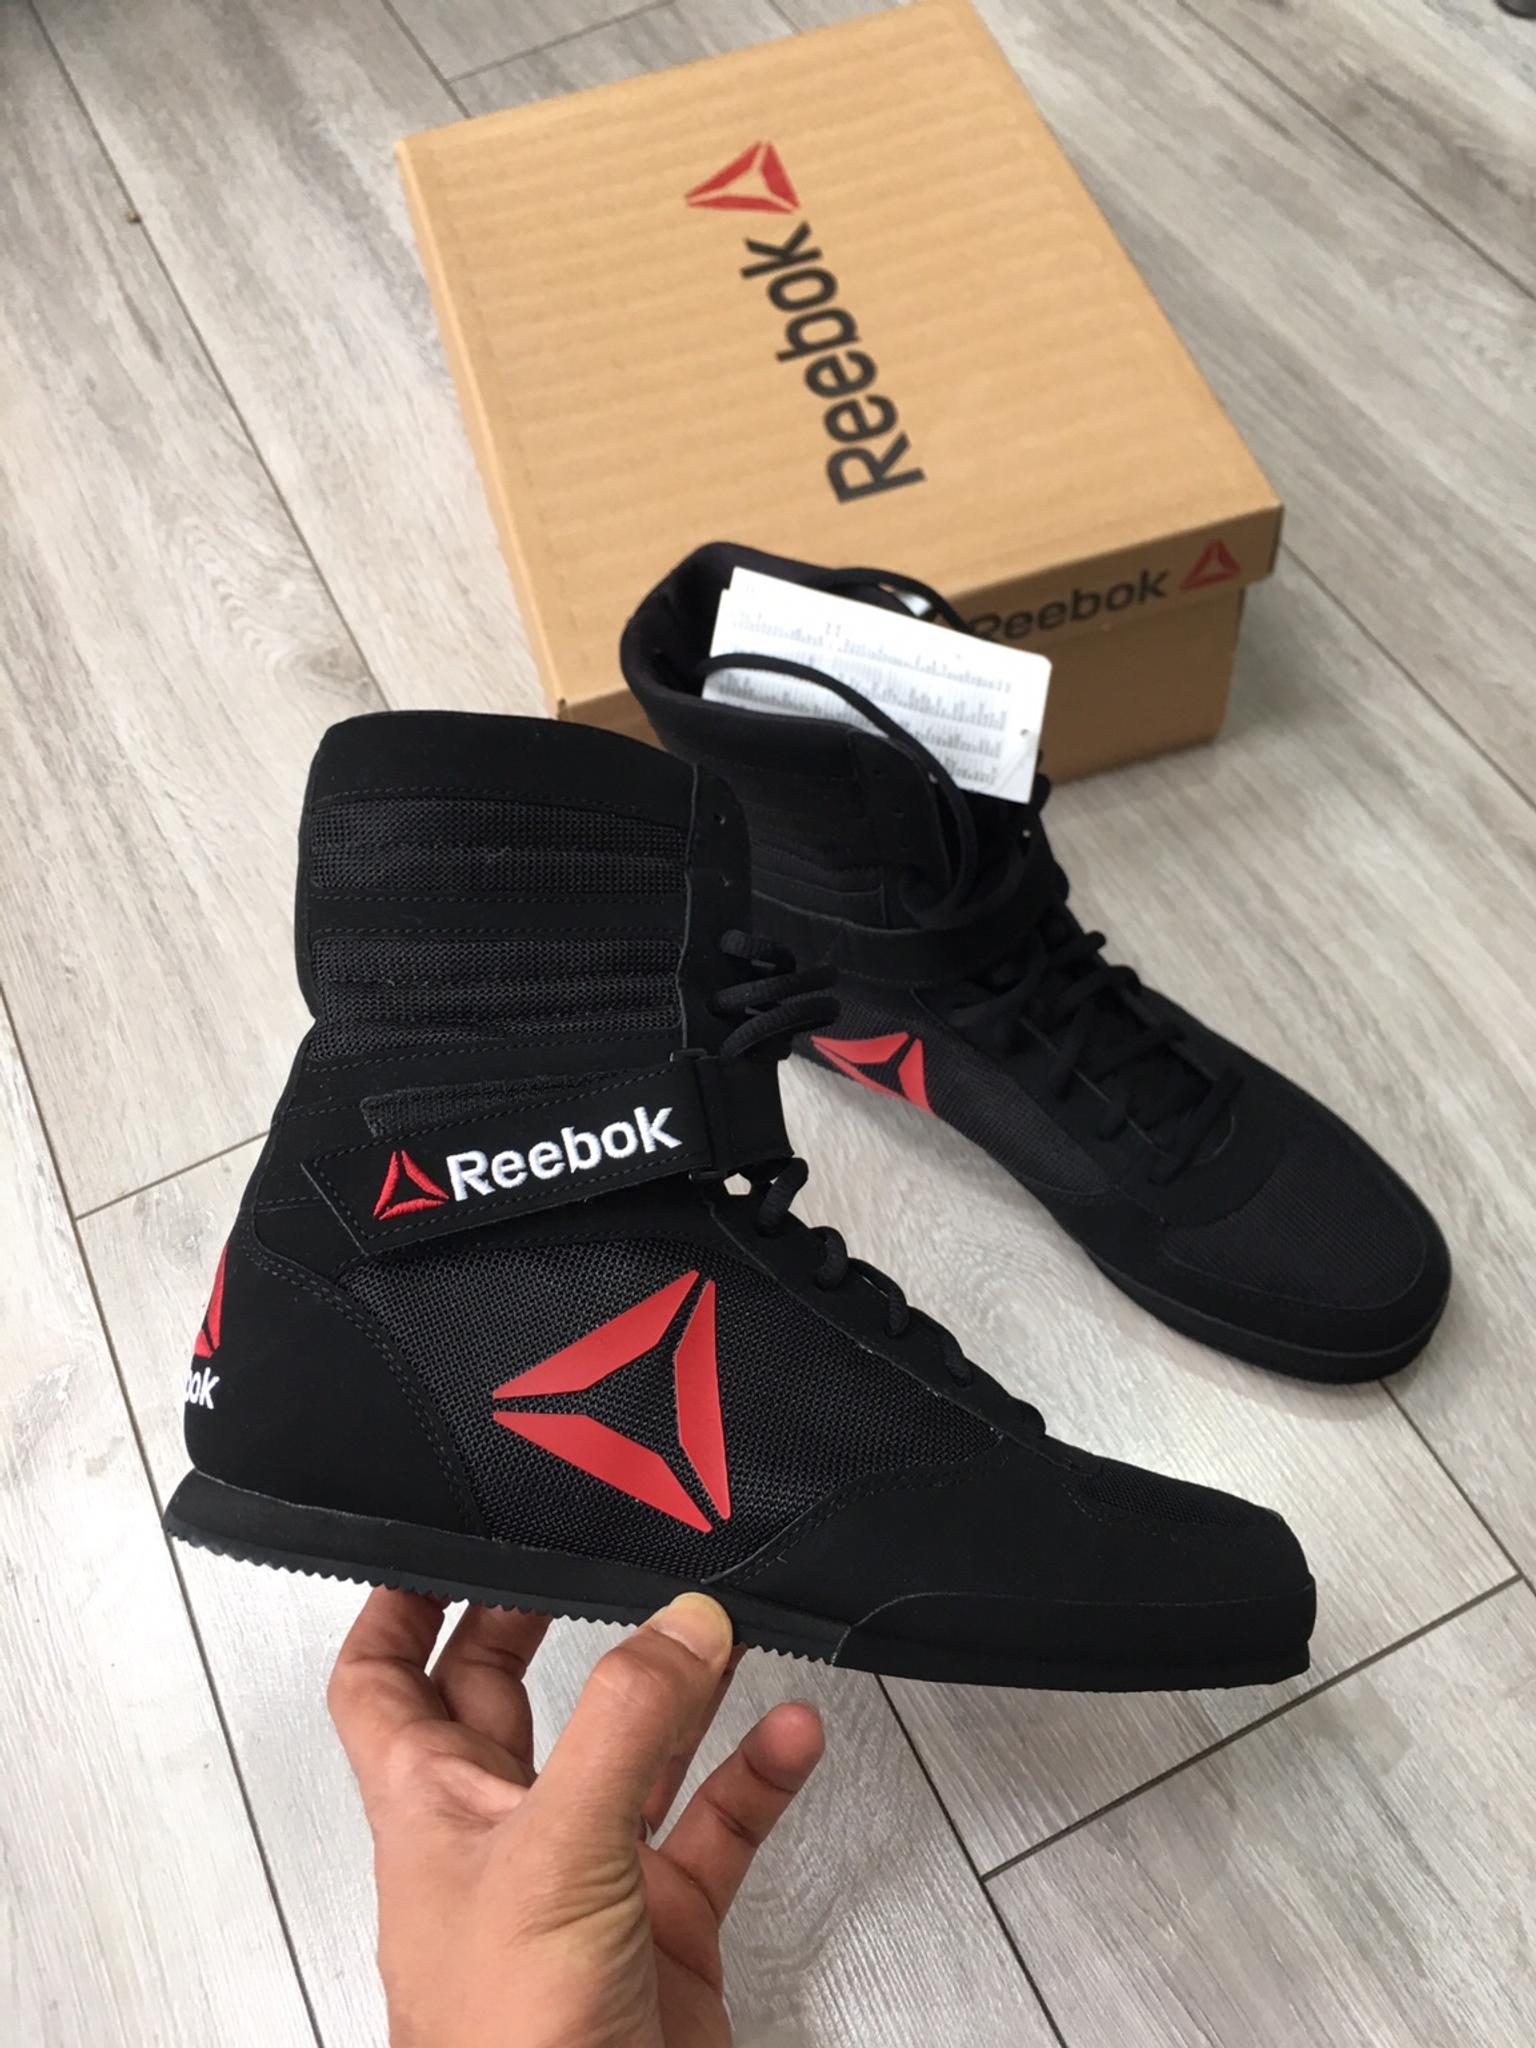 new reebok boxing shoes